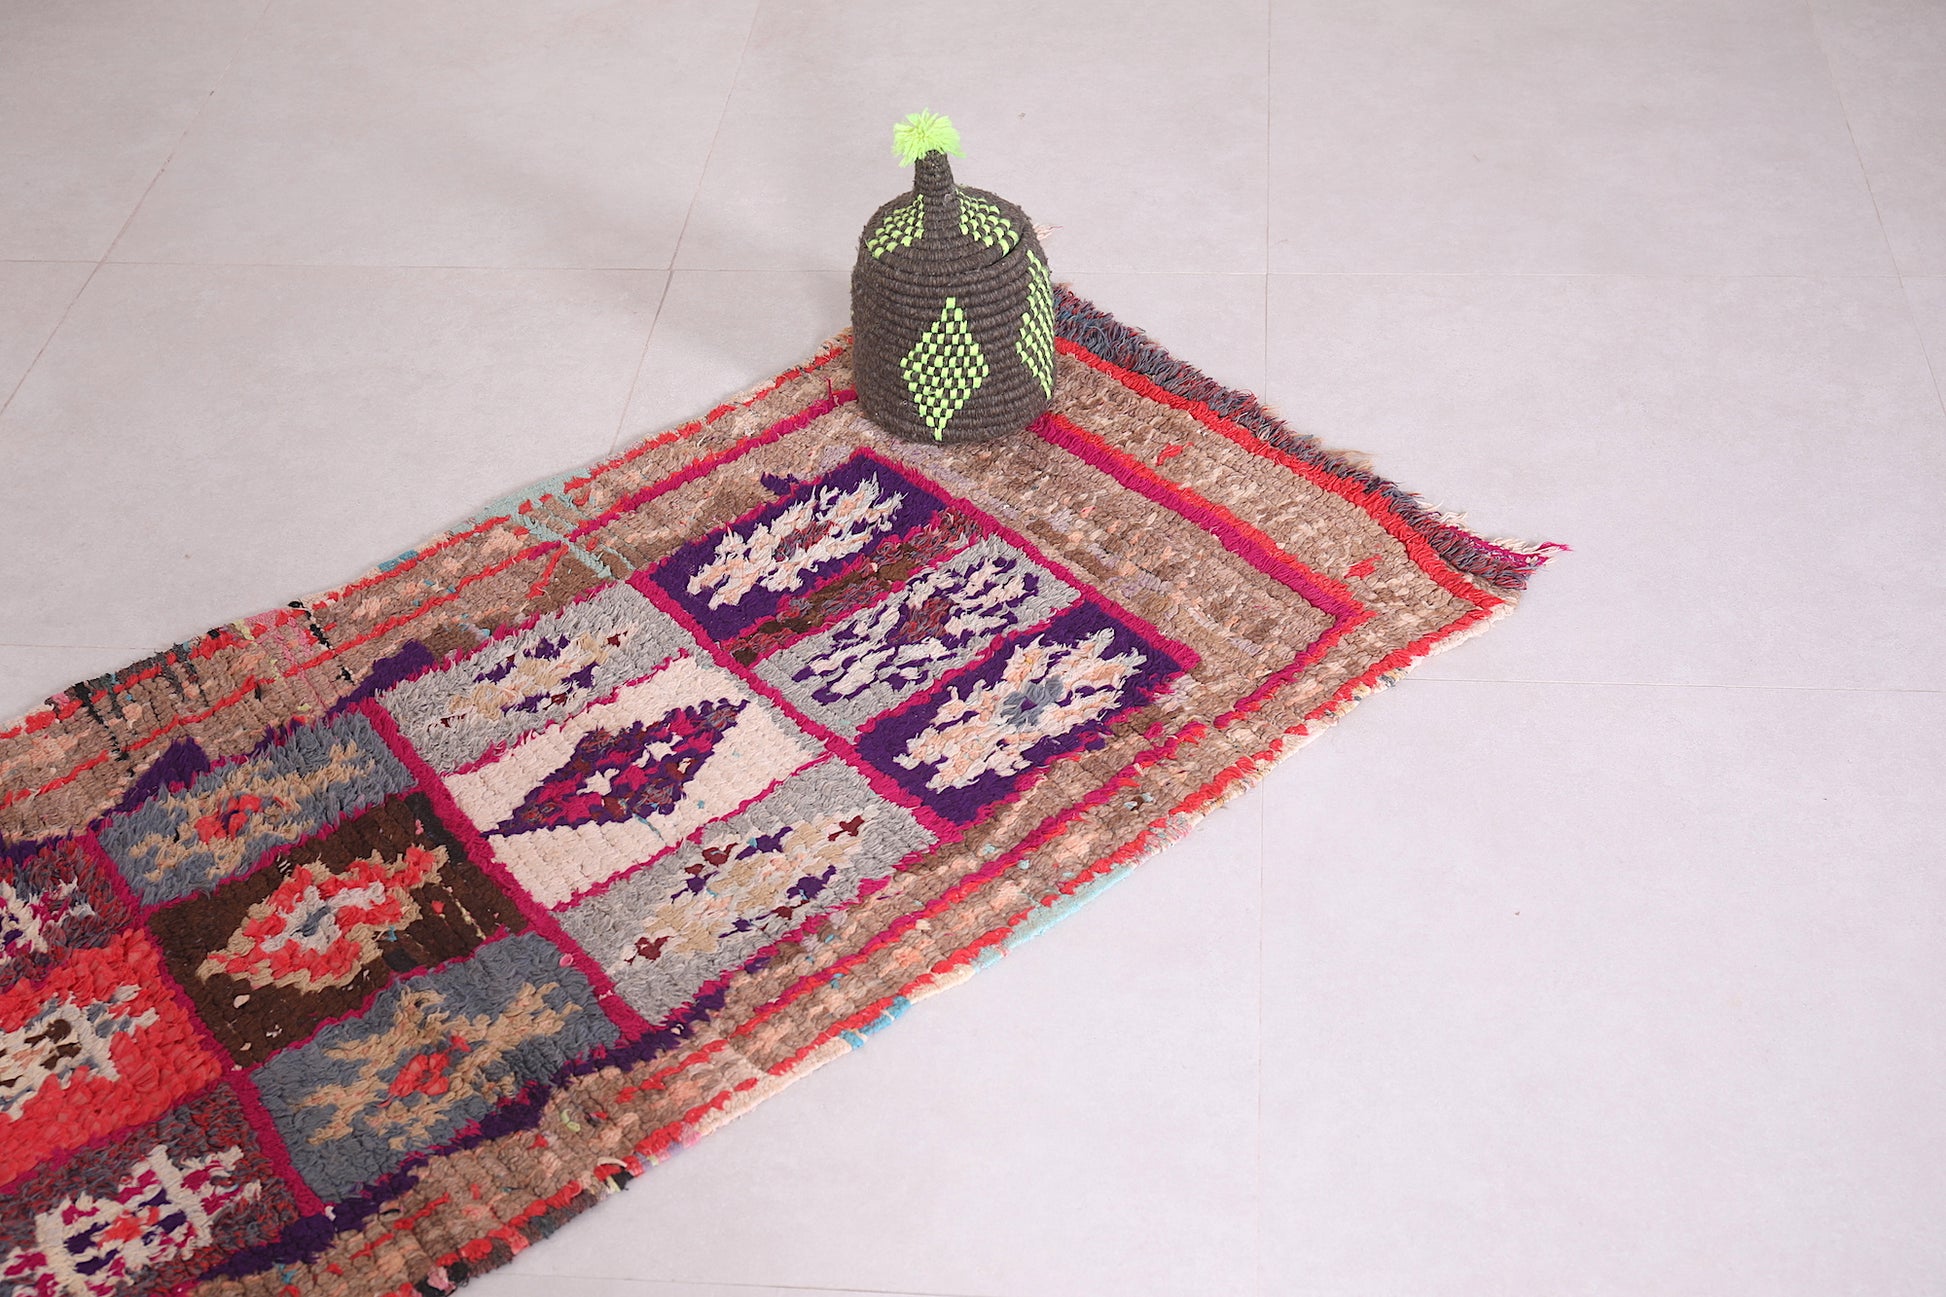 Moroccan Berber Runner rug 2.3 X 5.9 Feet